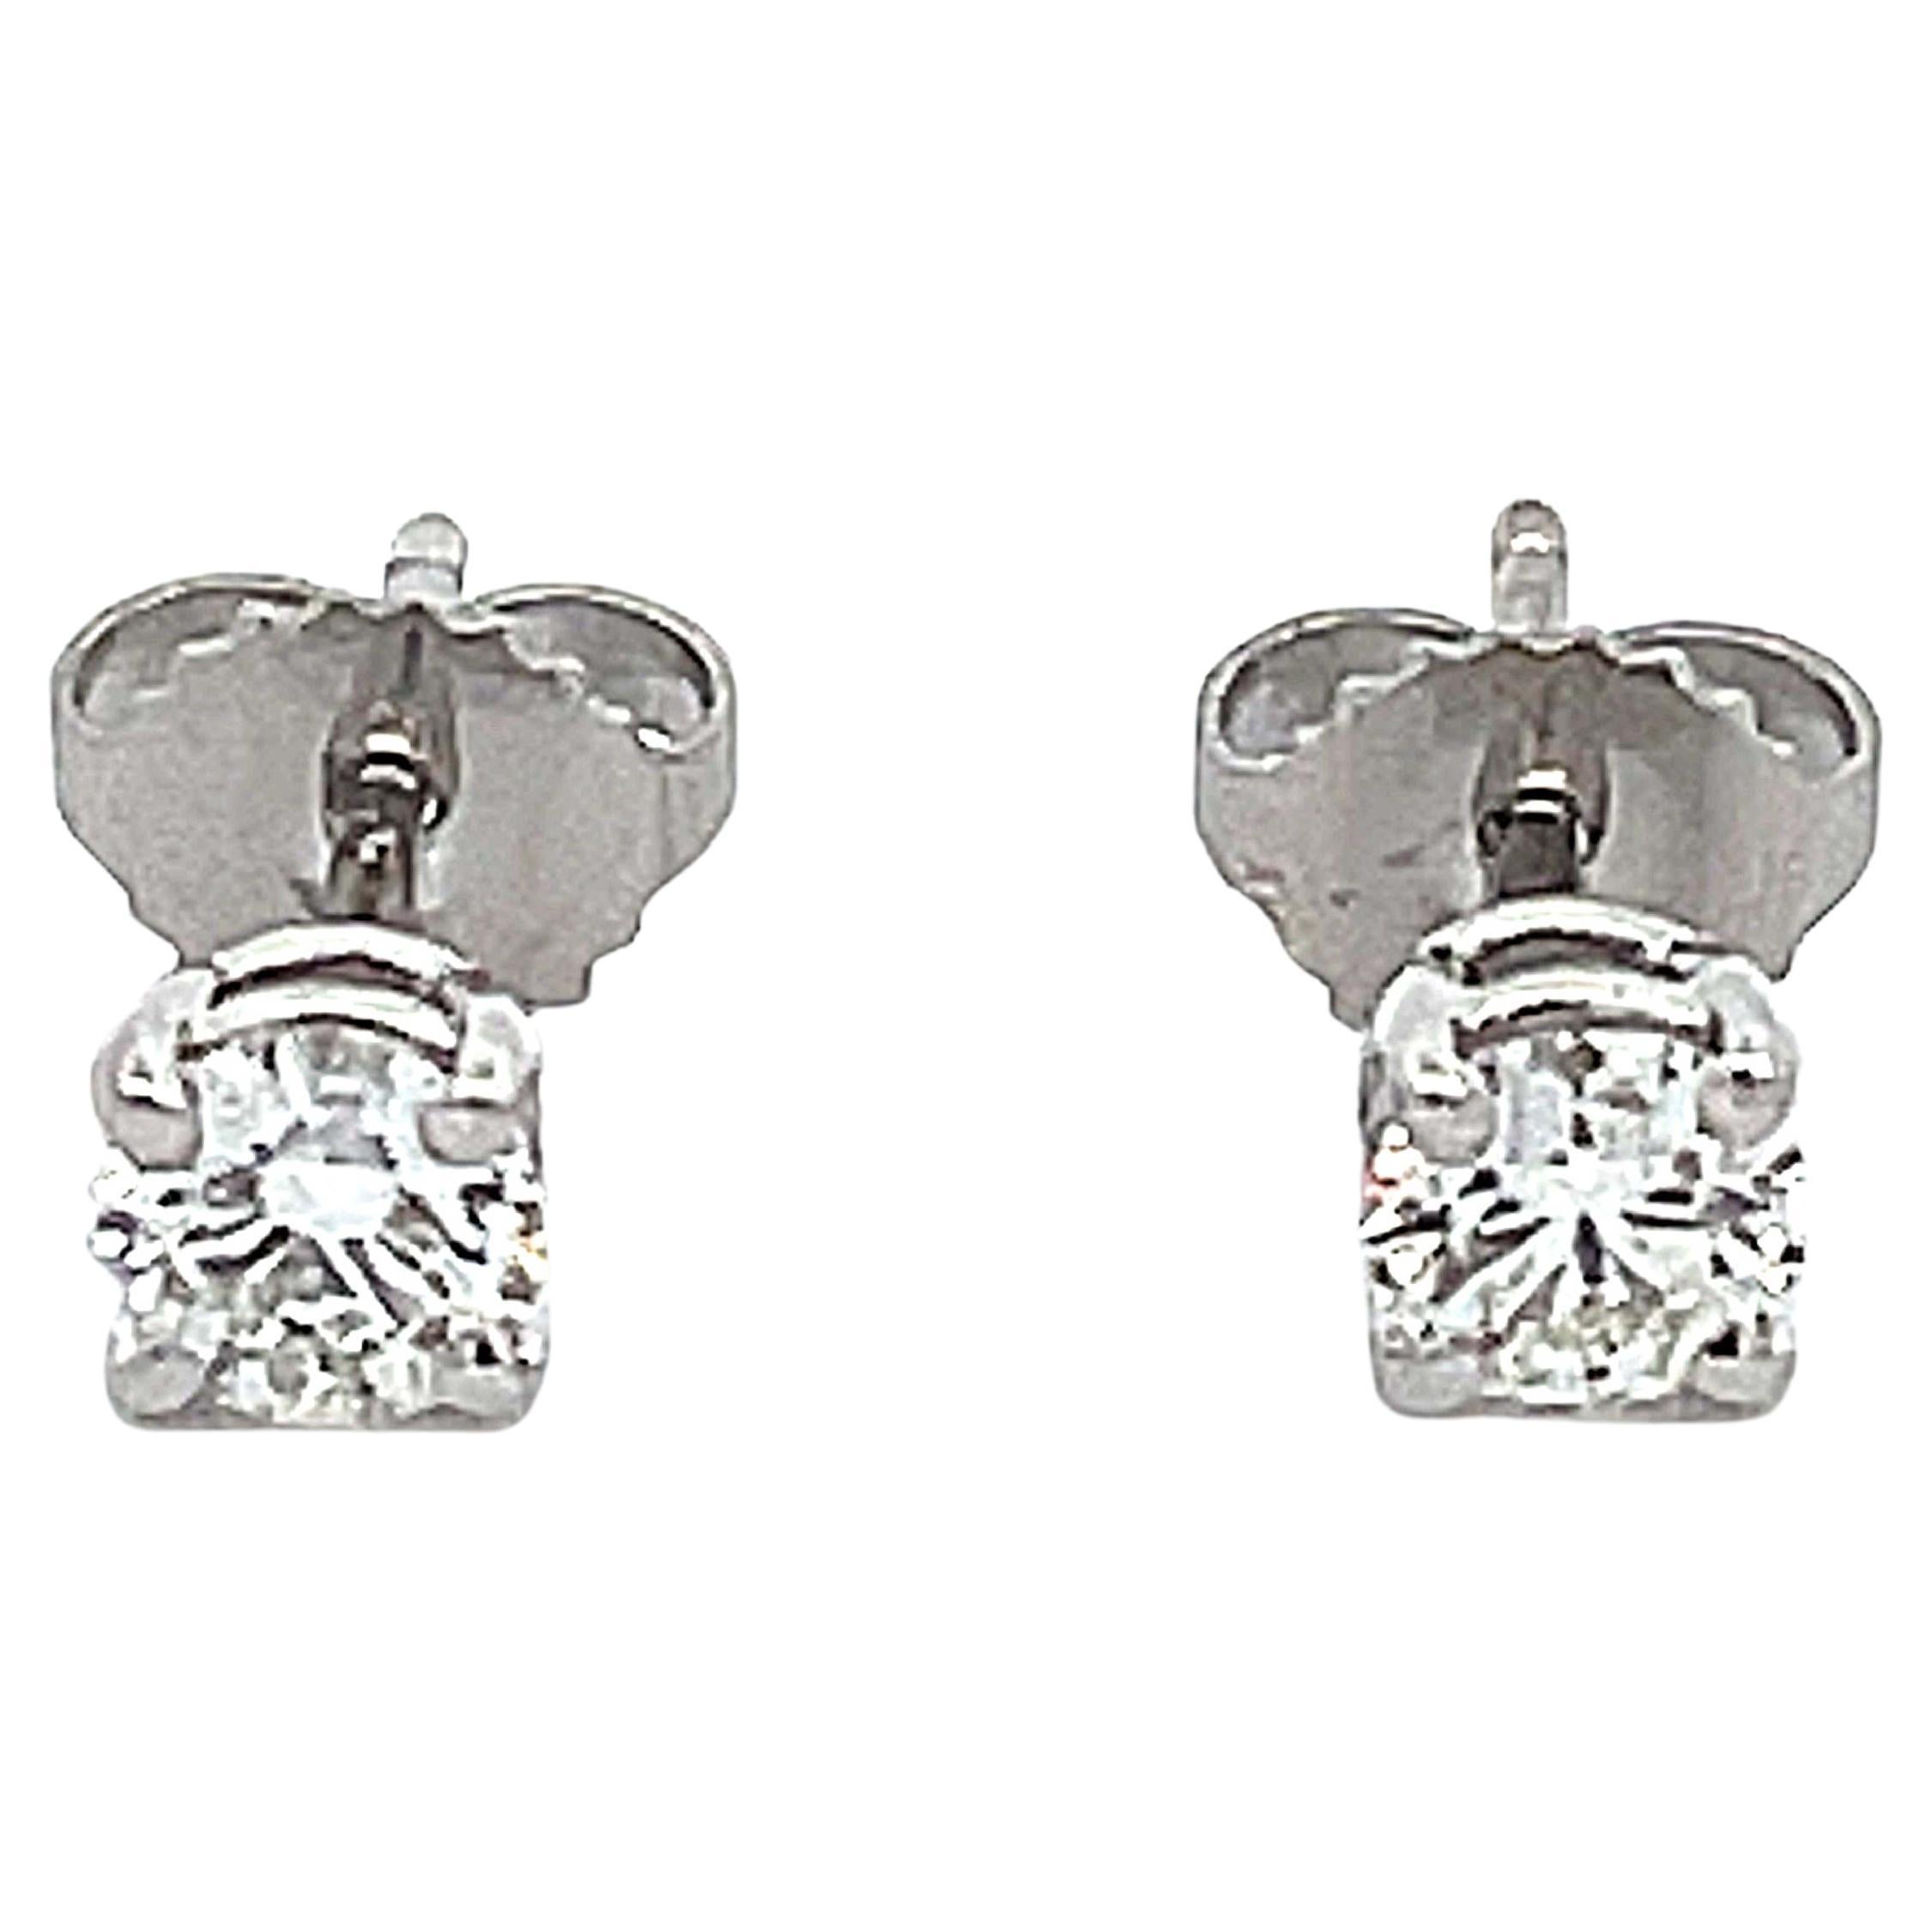 Tiffany Solitaire Diamond Stud Earrings in Platinum 0.58 ct